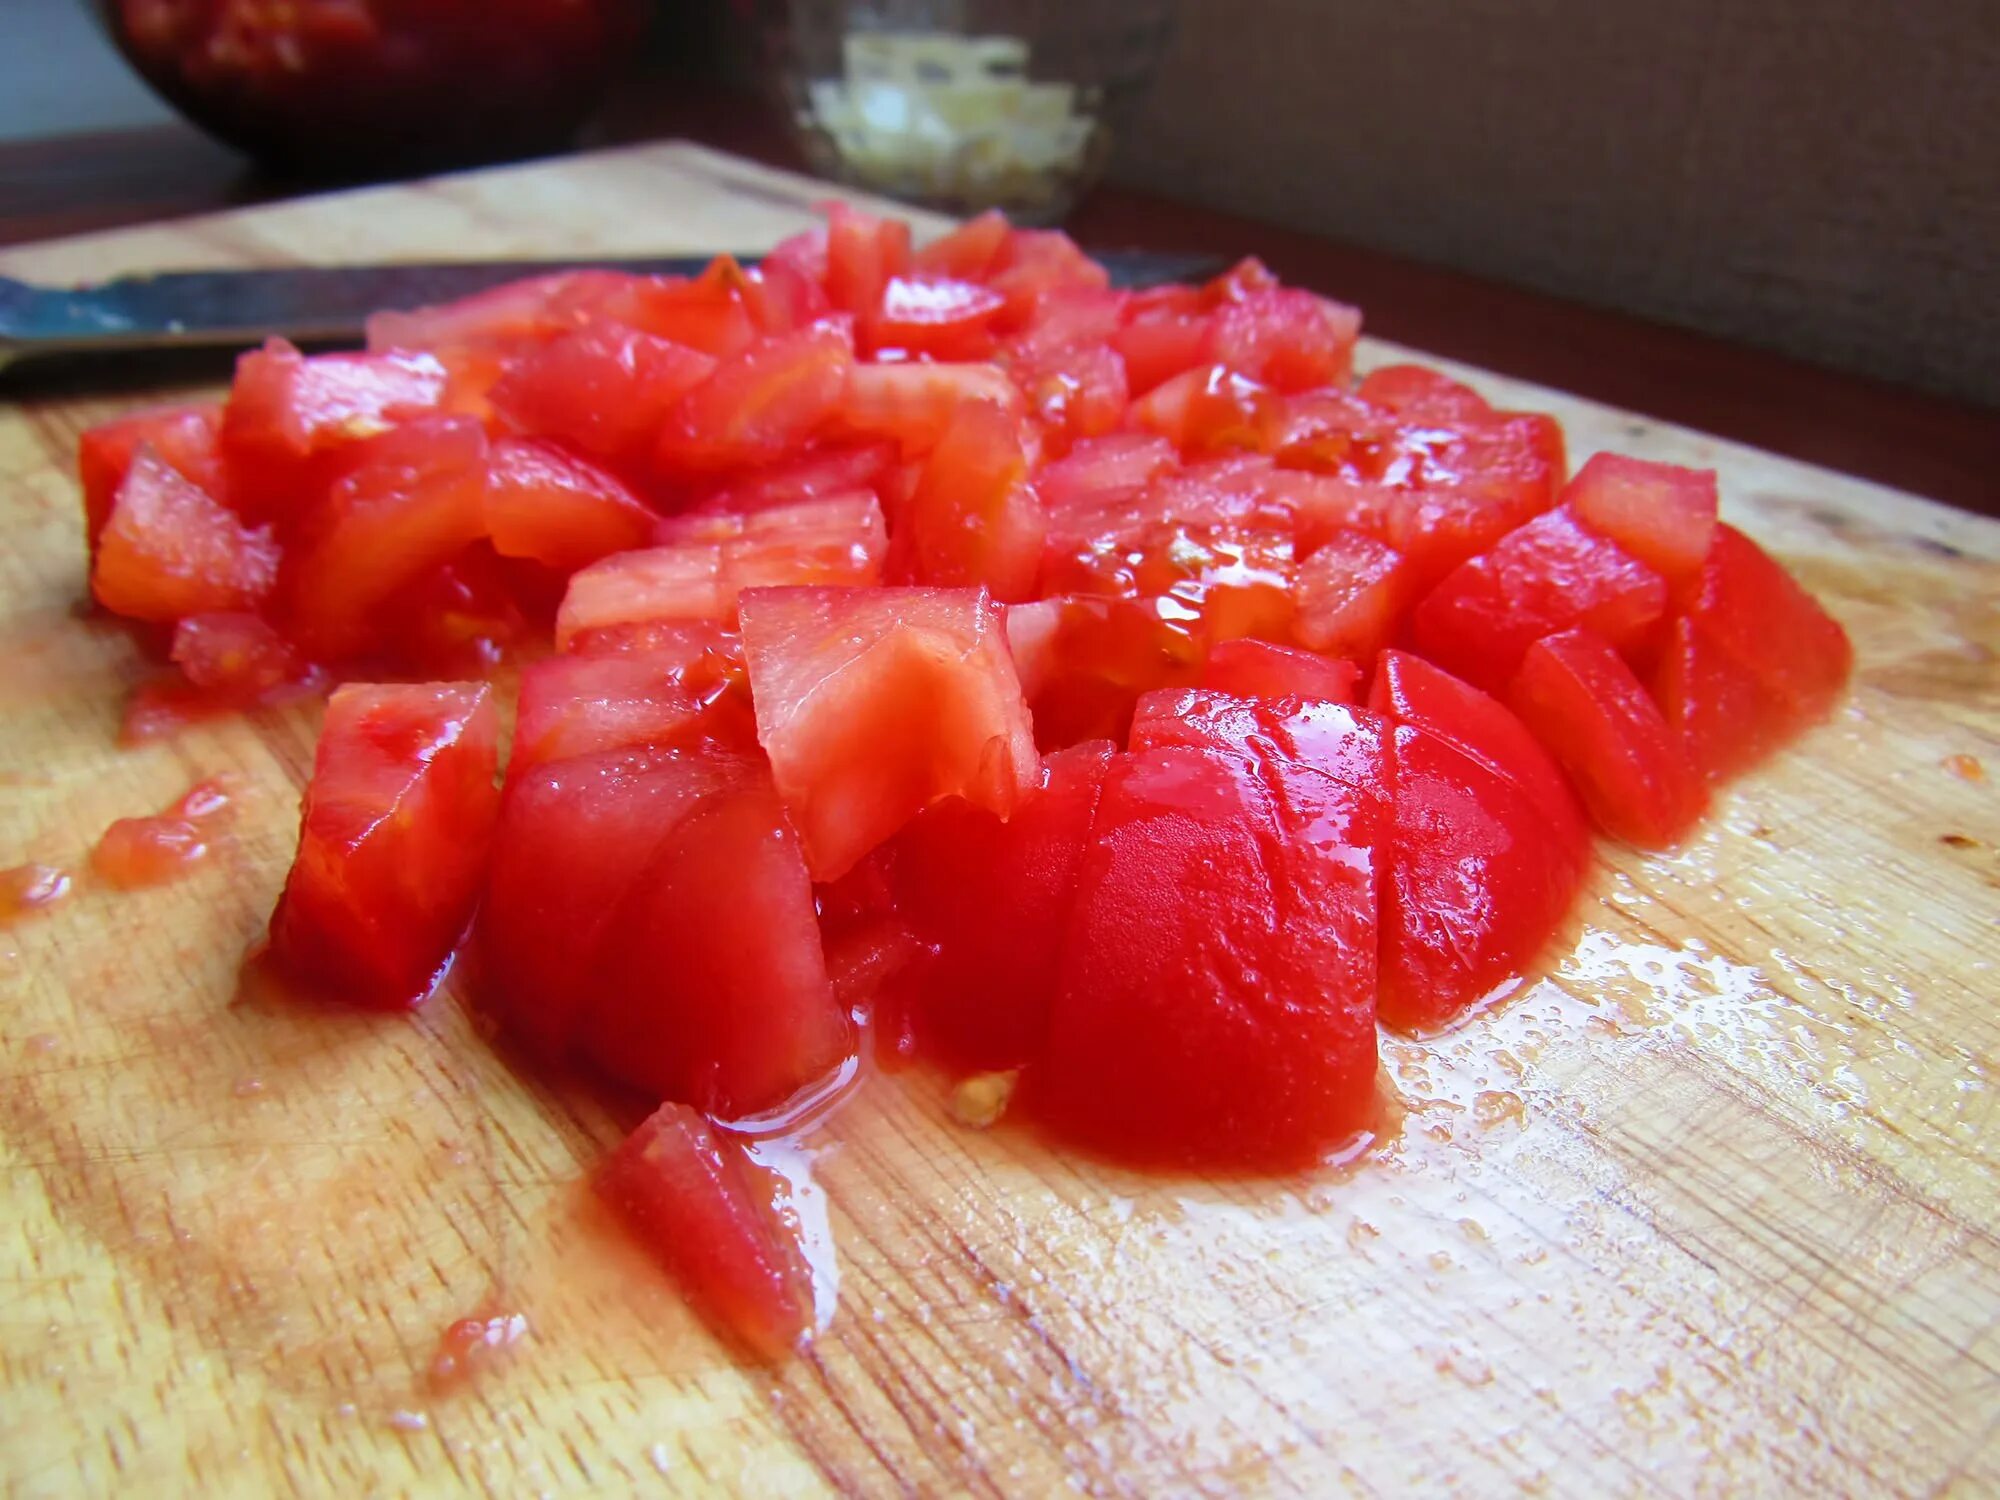 Кожура томатов. Помидор нарезанный. Помидоры нарезанные кубиком. Мелко порезанные помидоры. Помидоры нарезанные кубиками без кожицы.